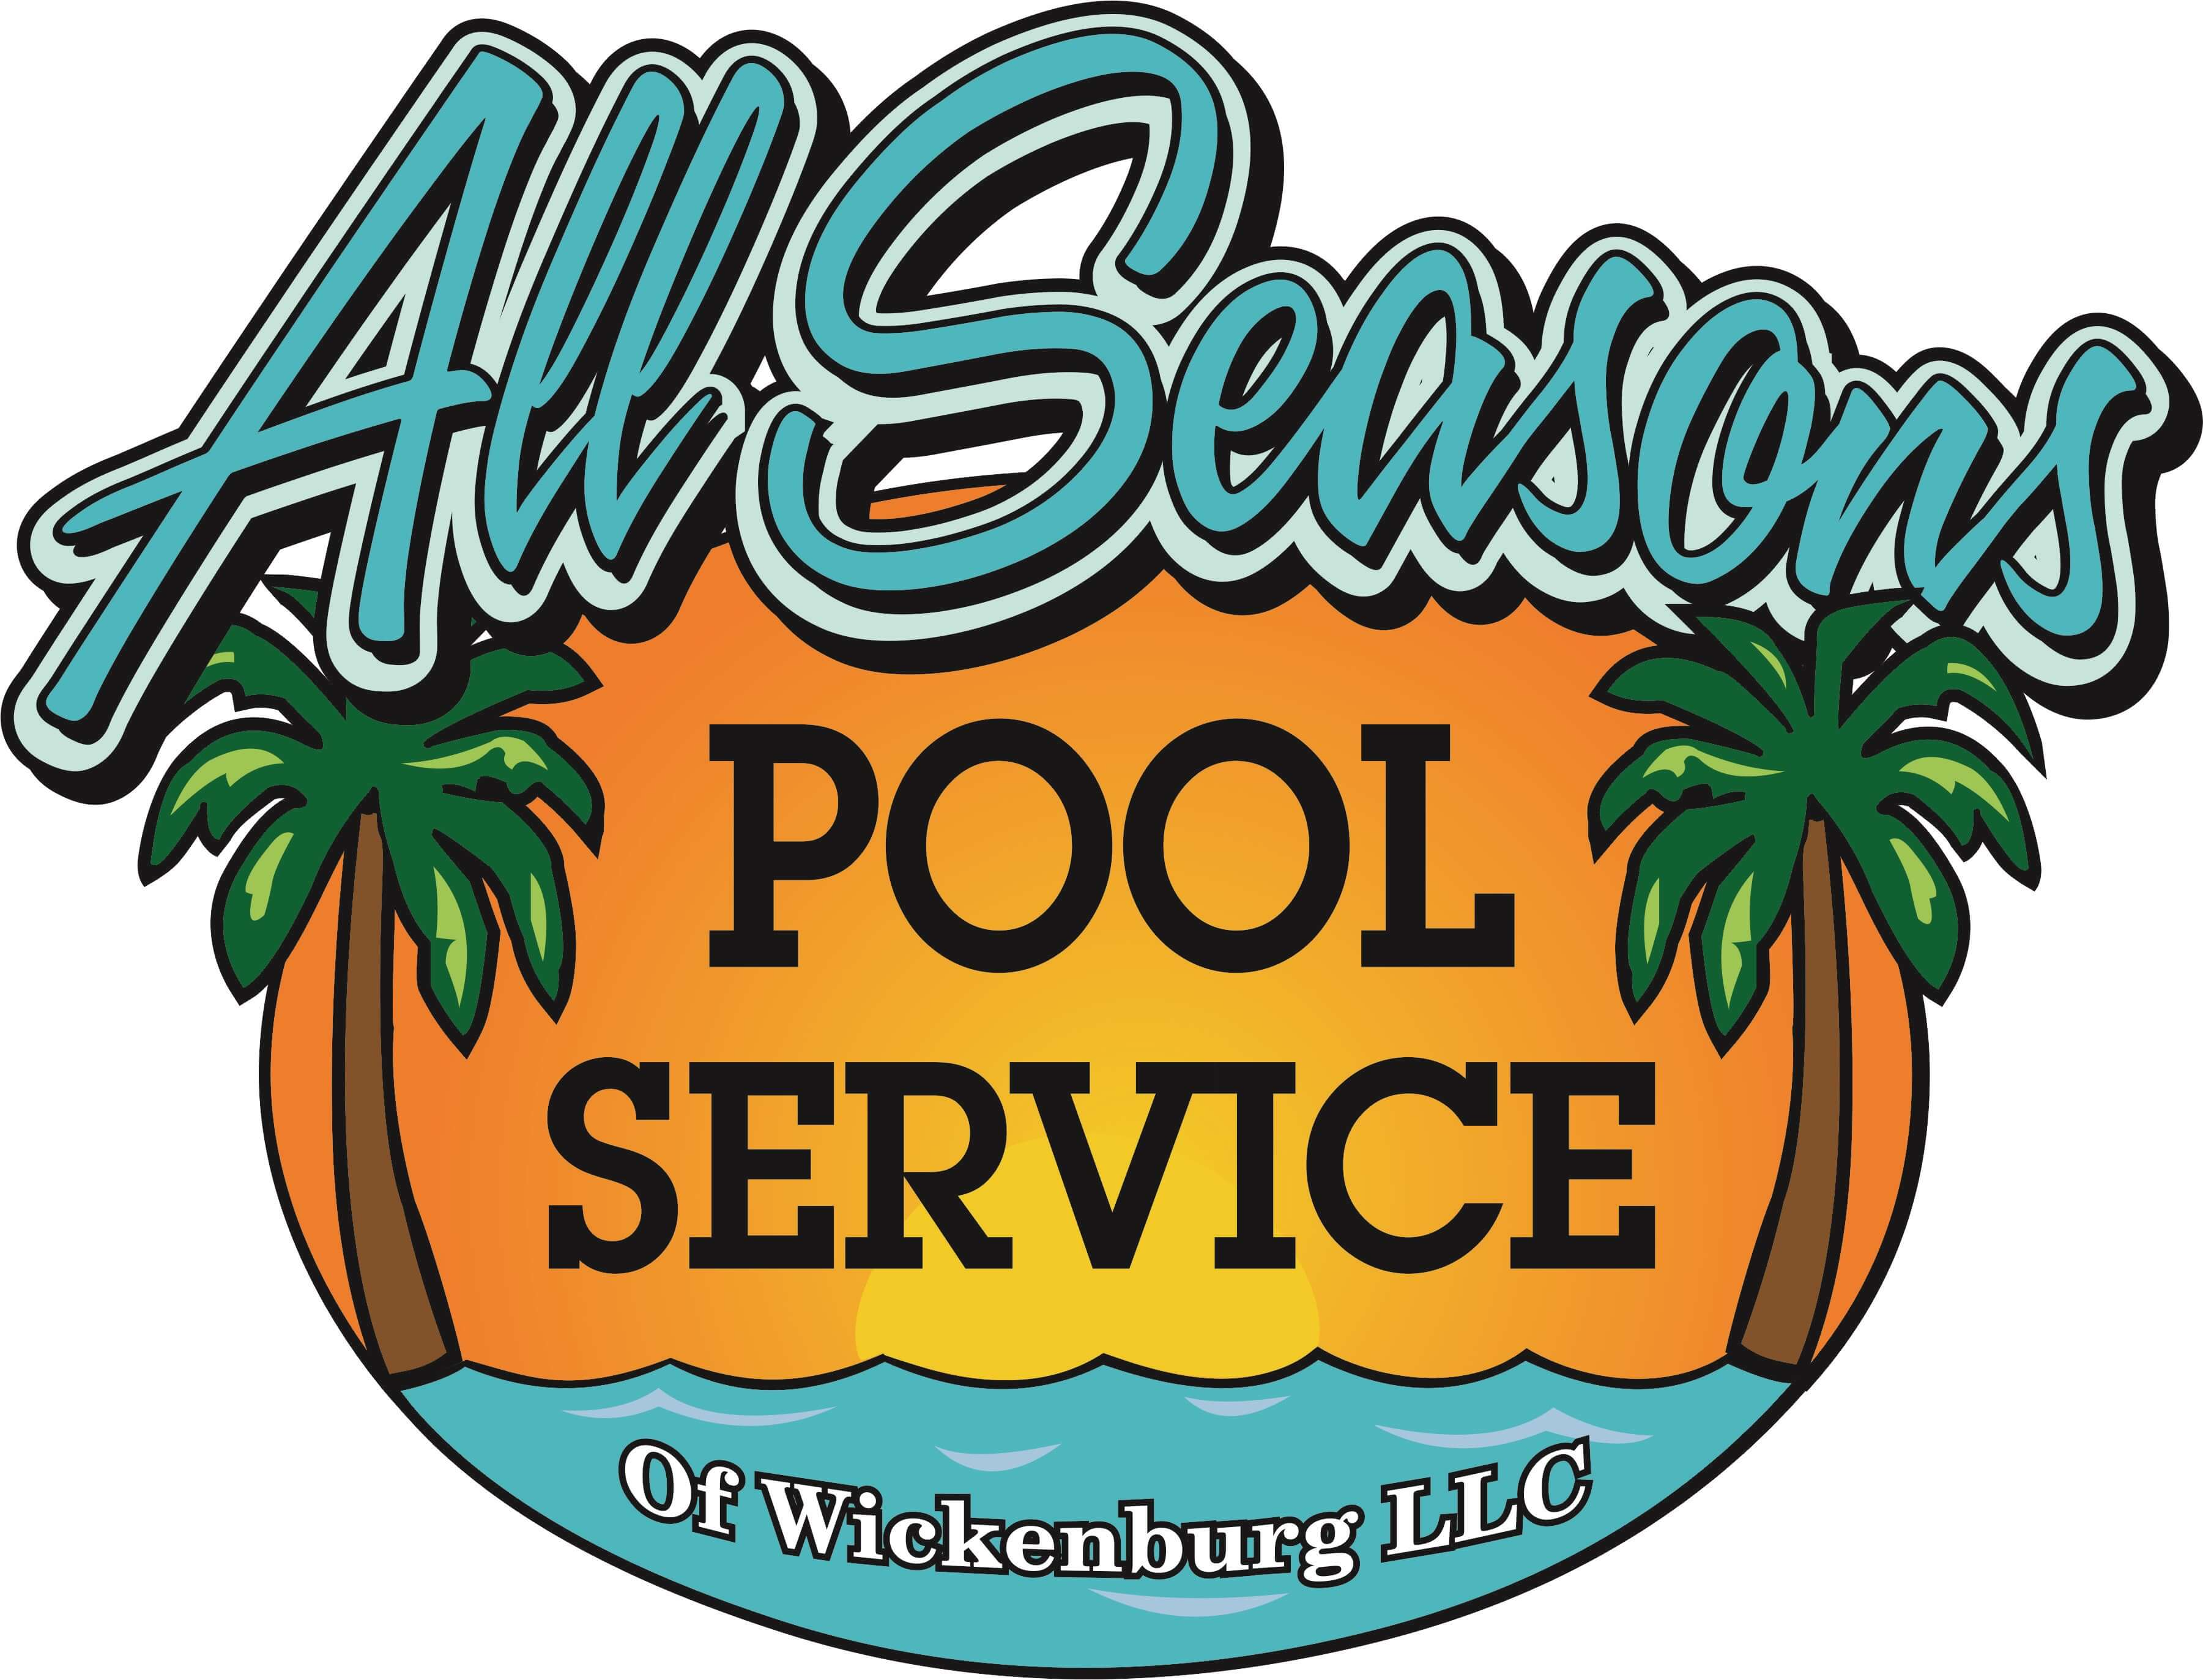 A pool service company logo with palm trees.